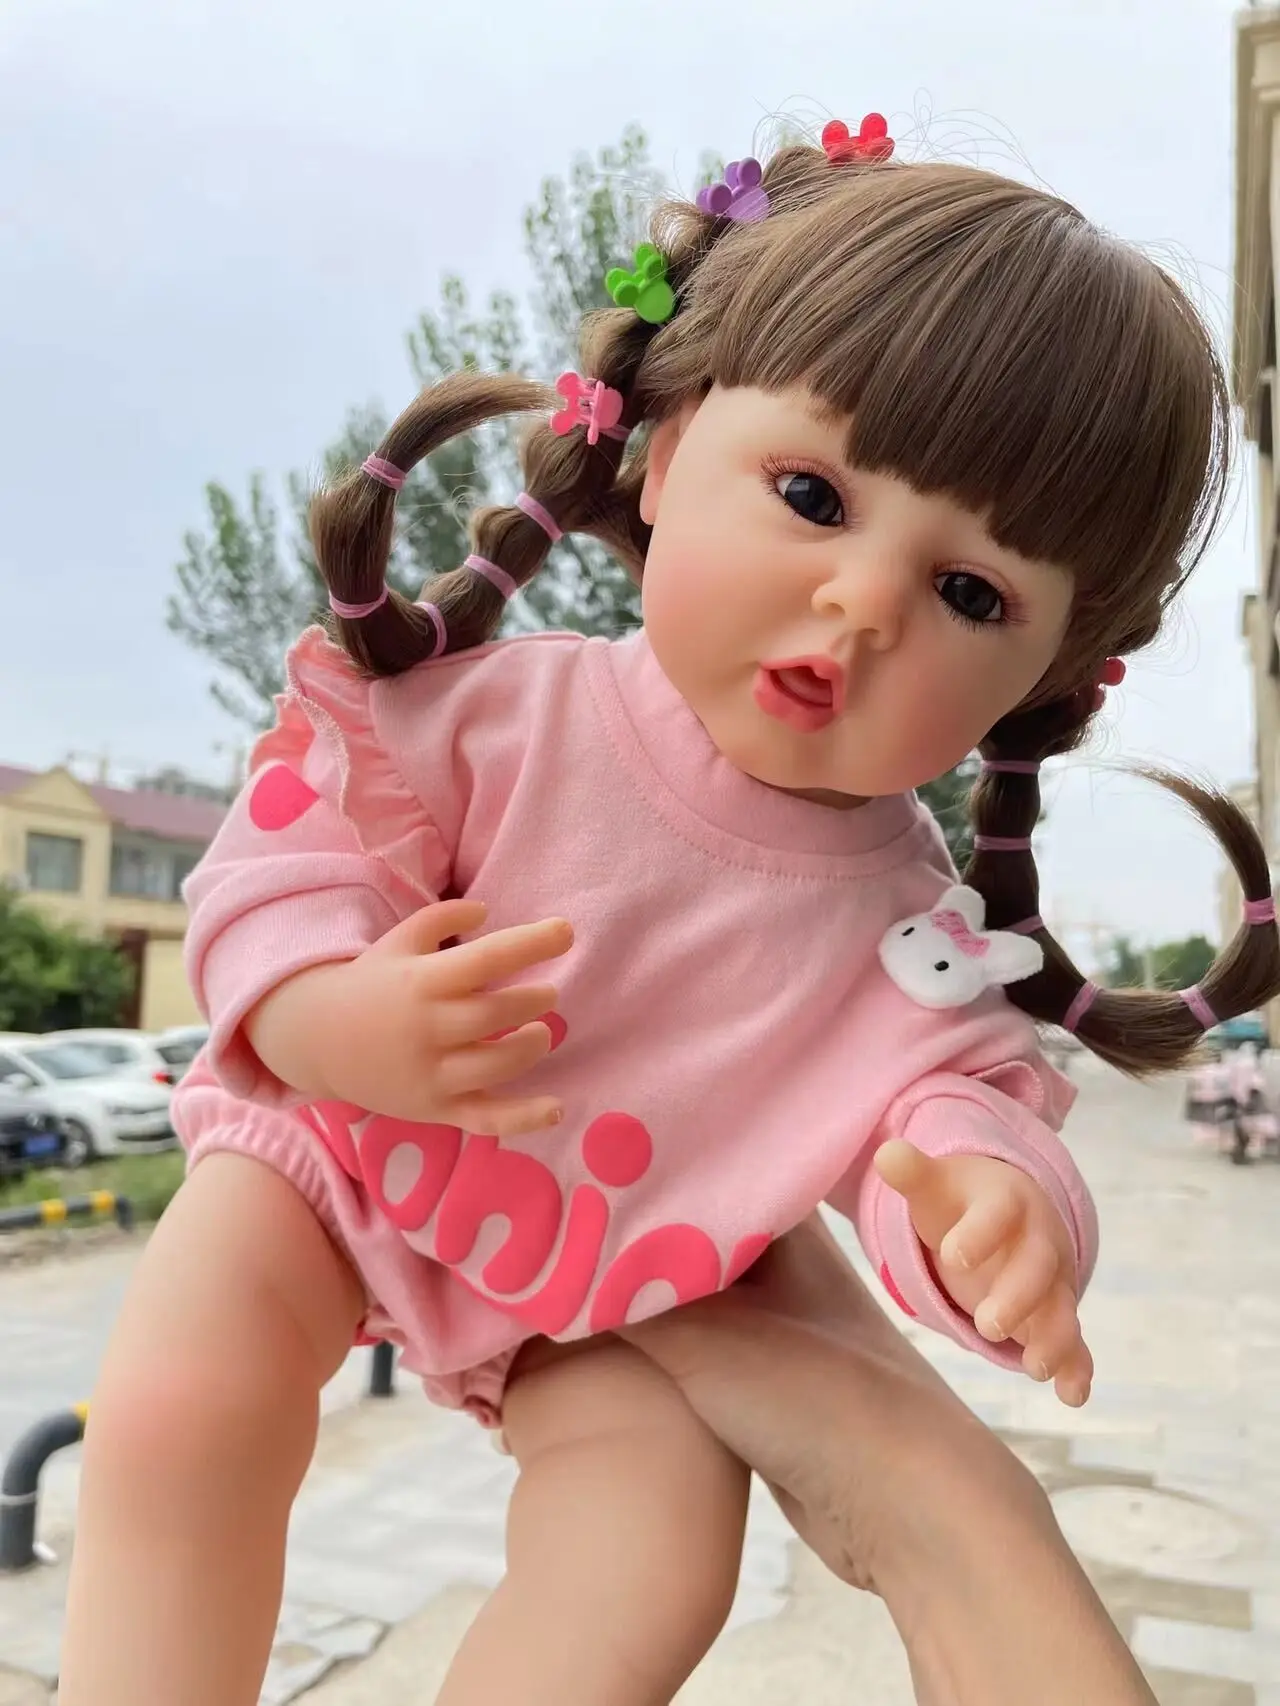 Popular Lovely Reborn Baby Doll 22 Inch Full Body Silicone Toddler 55CM Boneca Realistic Girl Toys Children's Day Birthday Gift